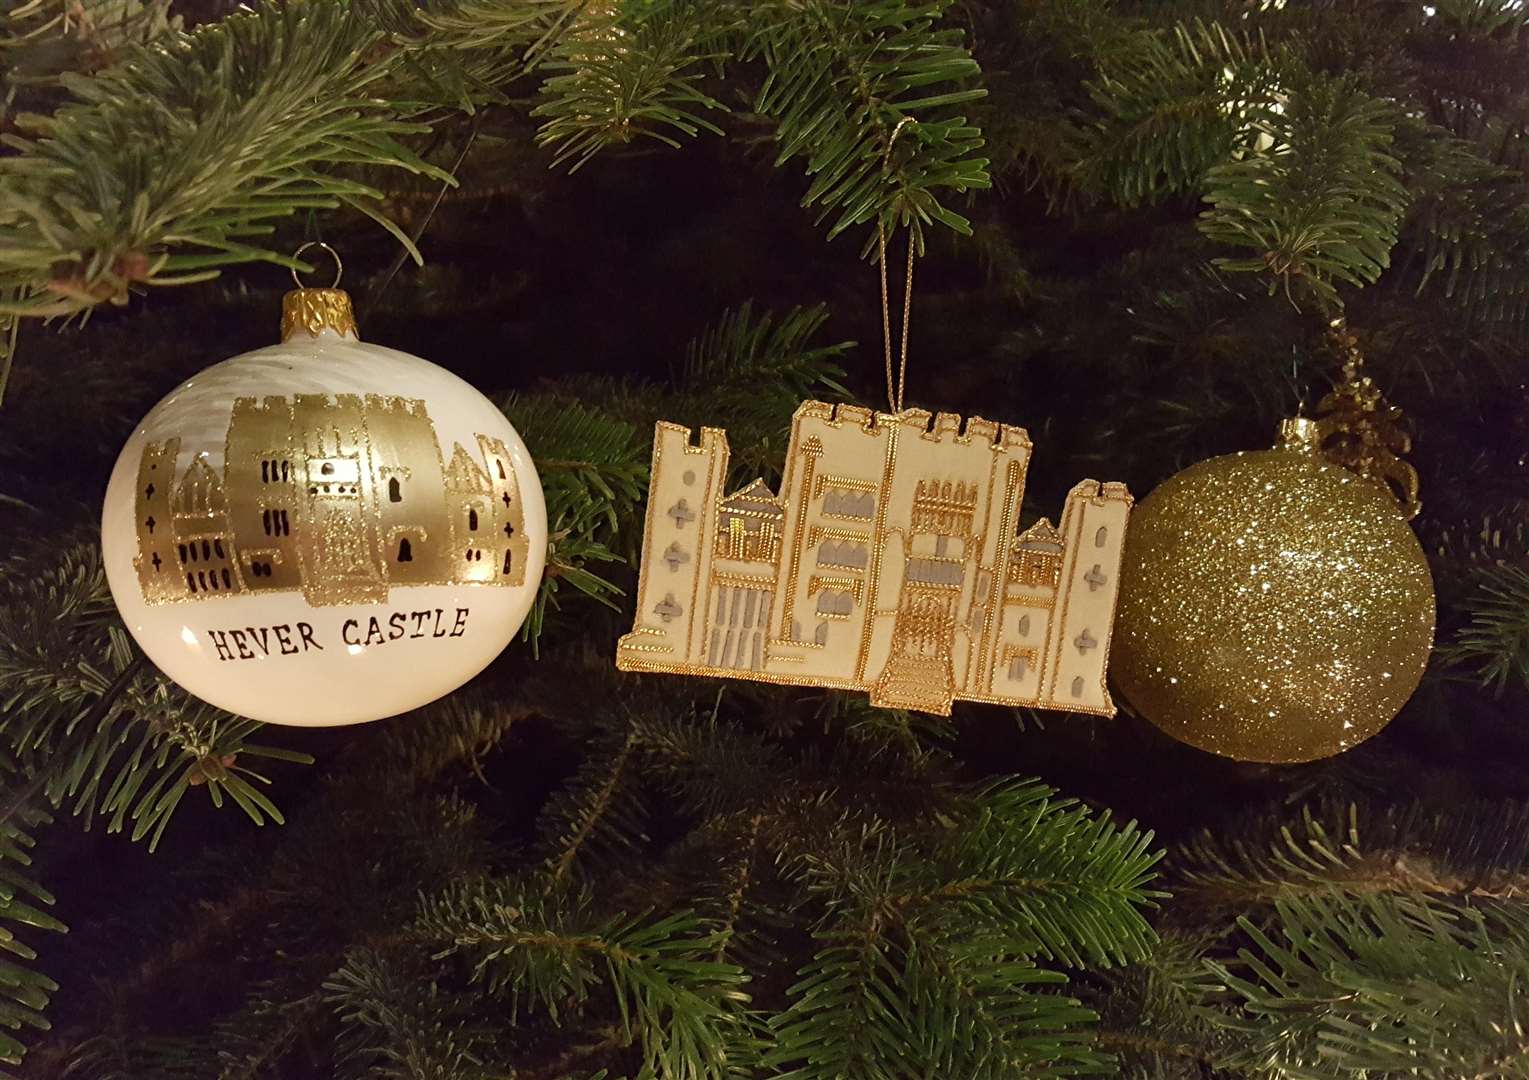 Hever Castle at Christmas involves many Christmas trees